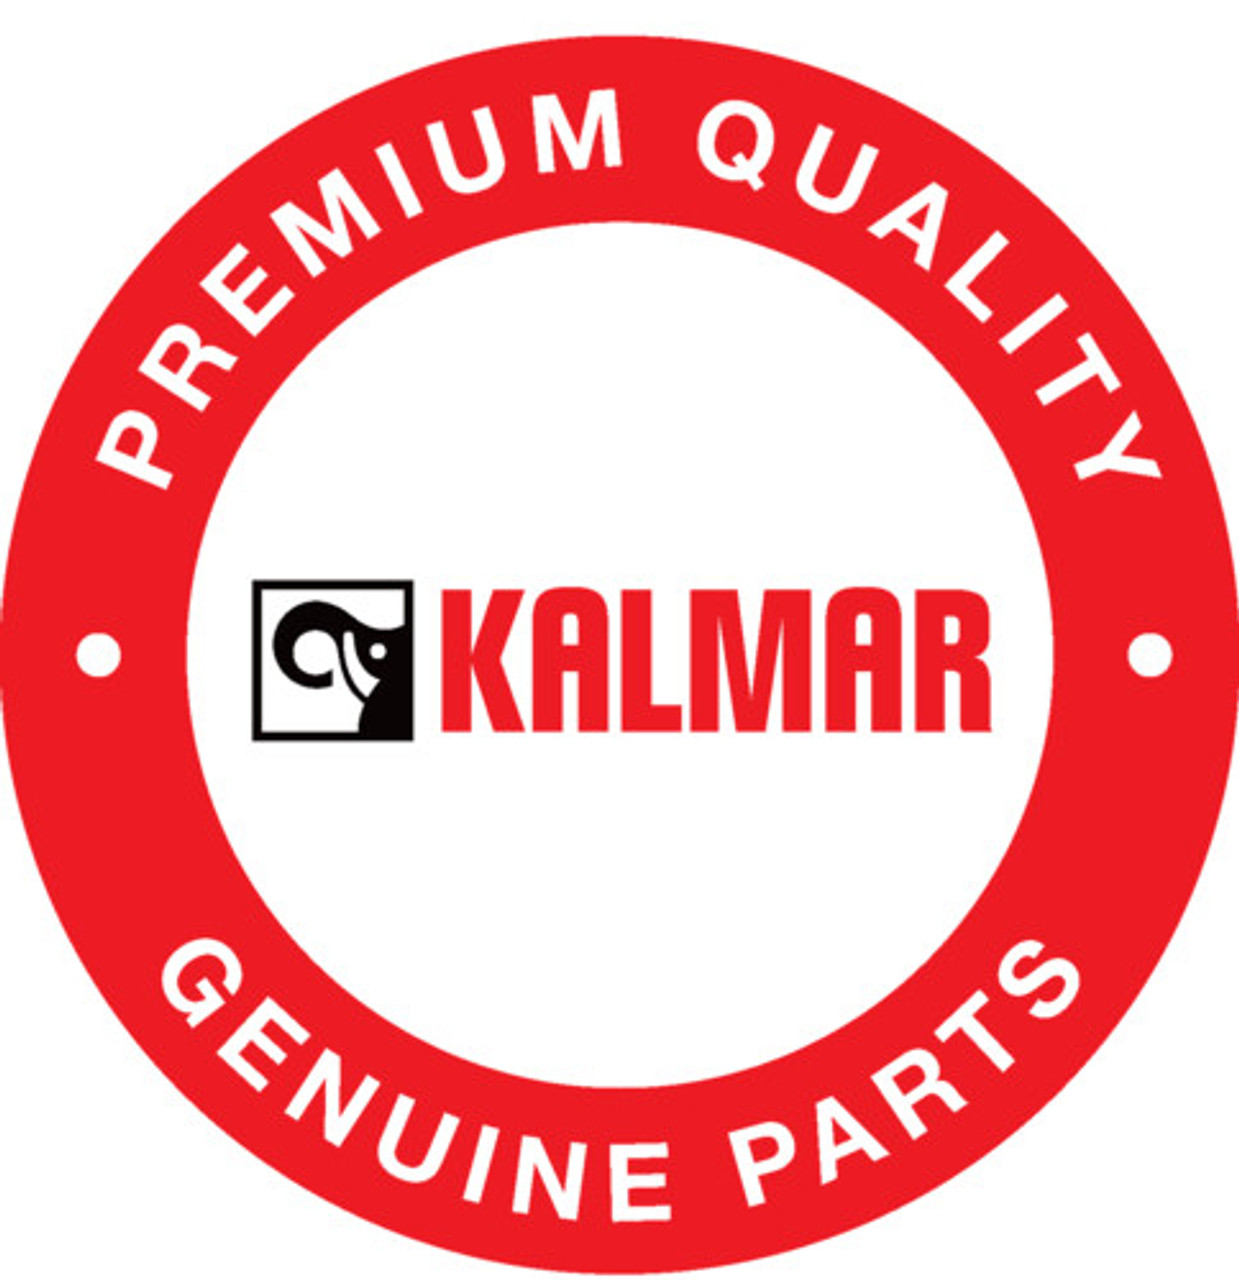 A51553.0100: Kalmar® Fastening Iron